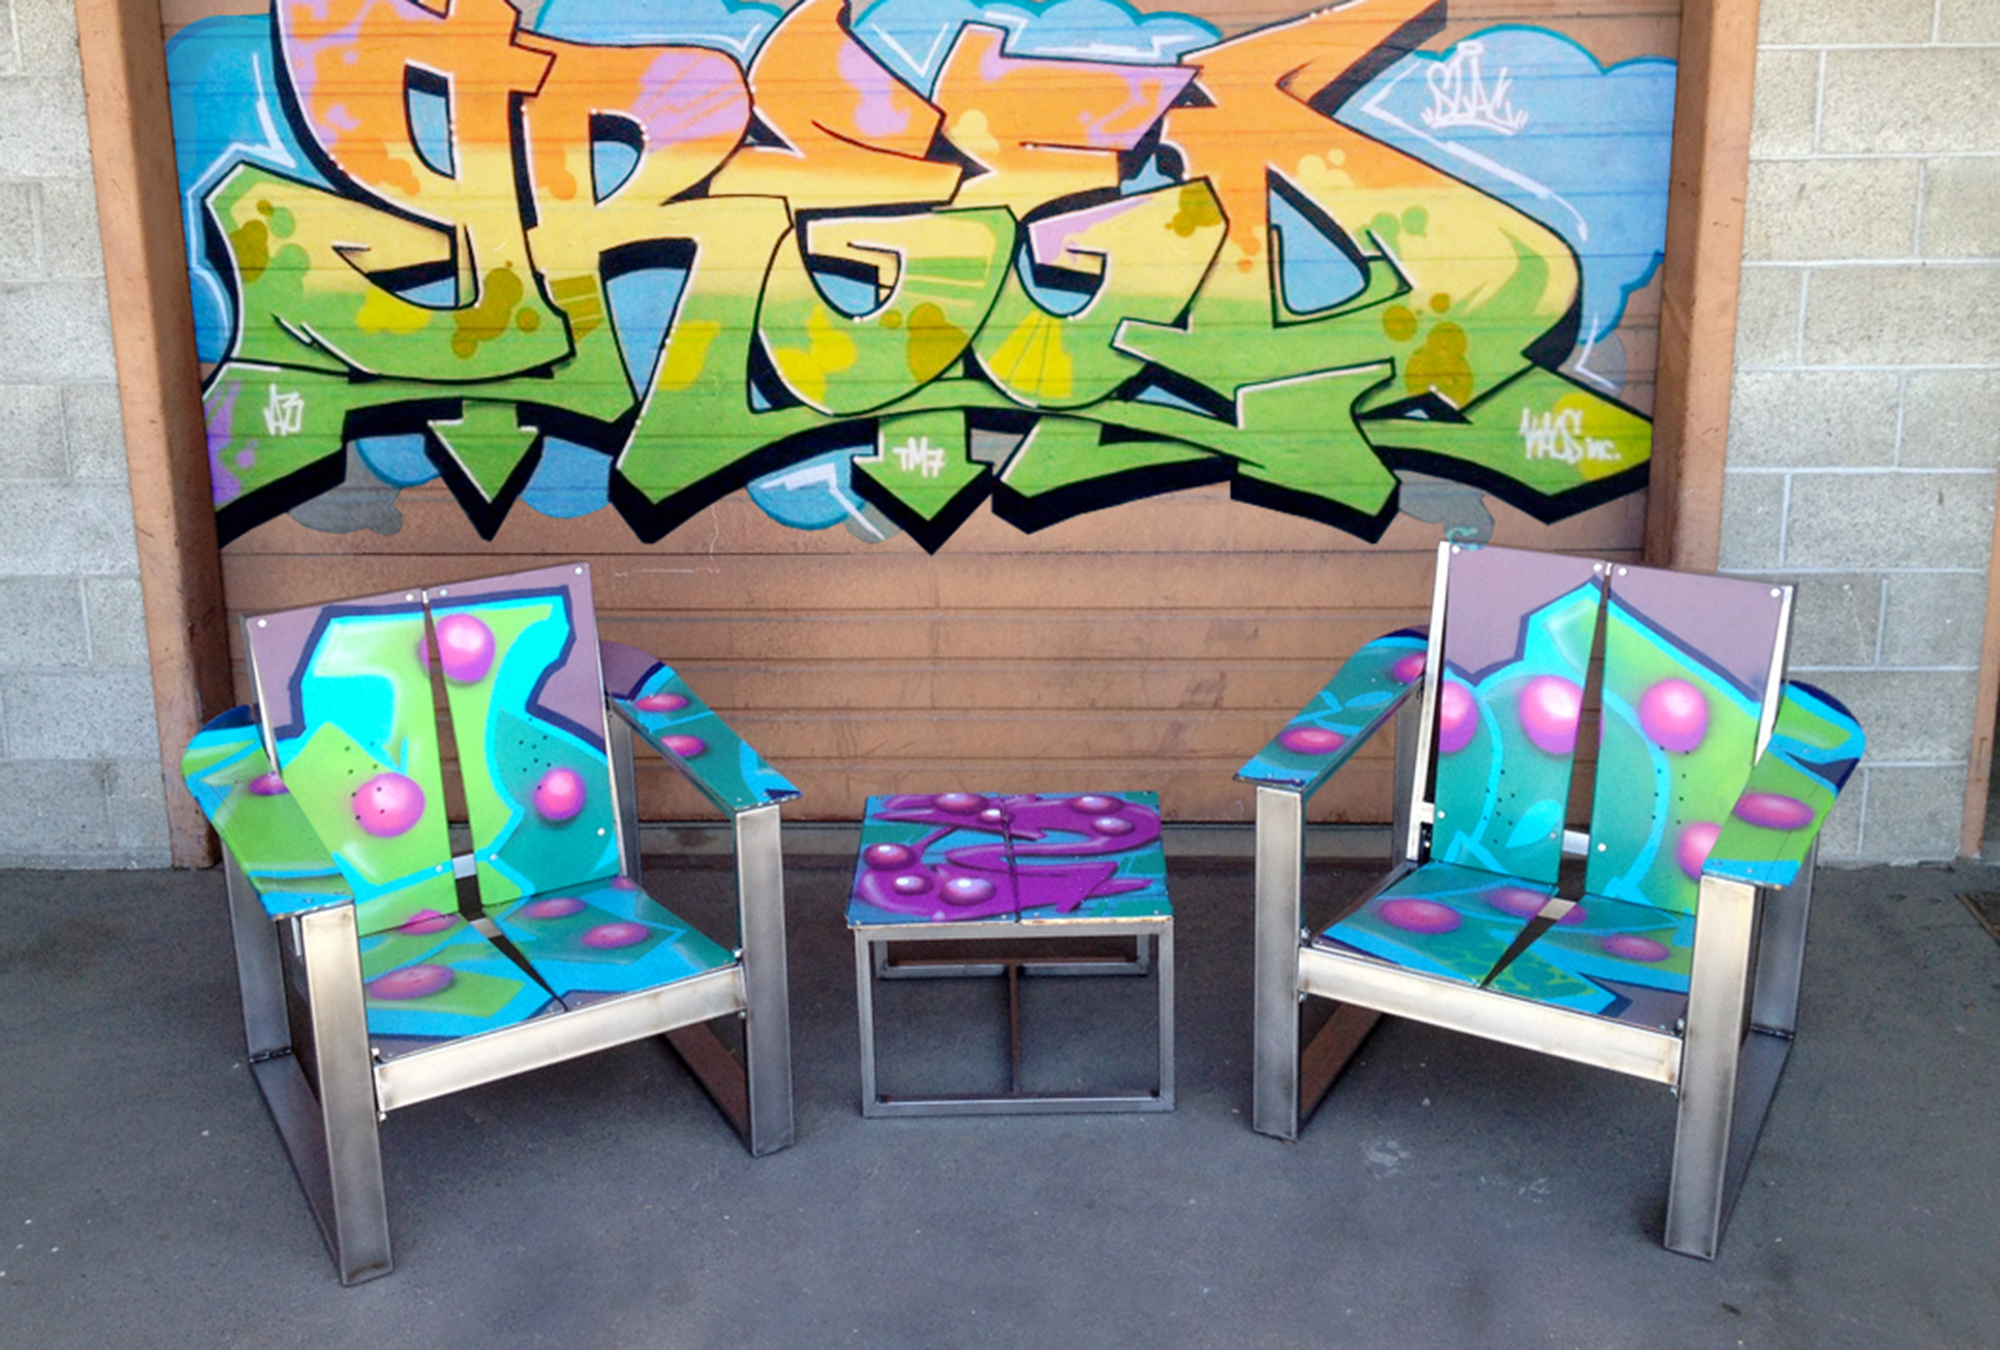 greed graffiti upcycled snowboard chairs